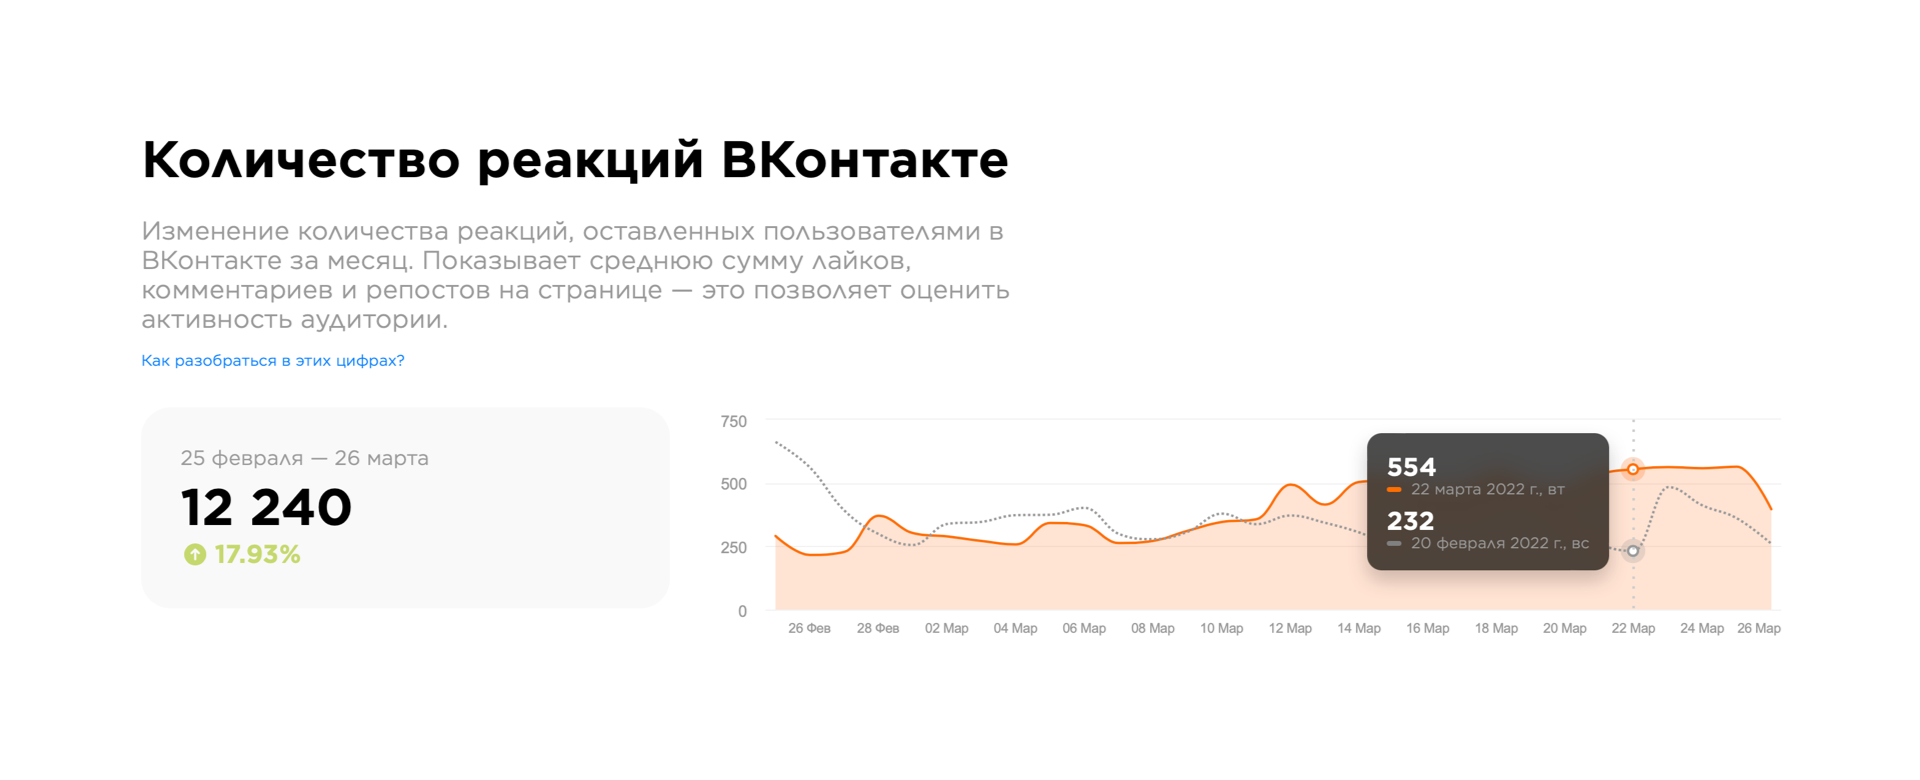 Количество реакций ВКонтакте